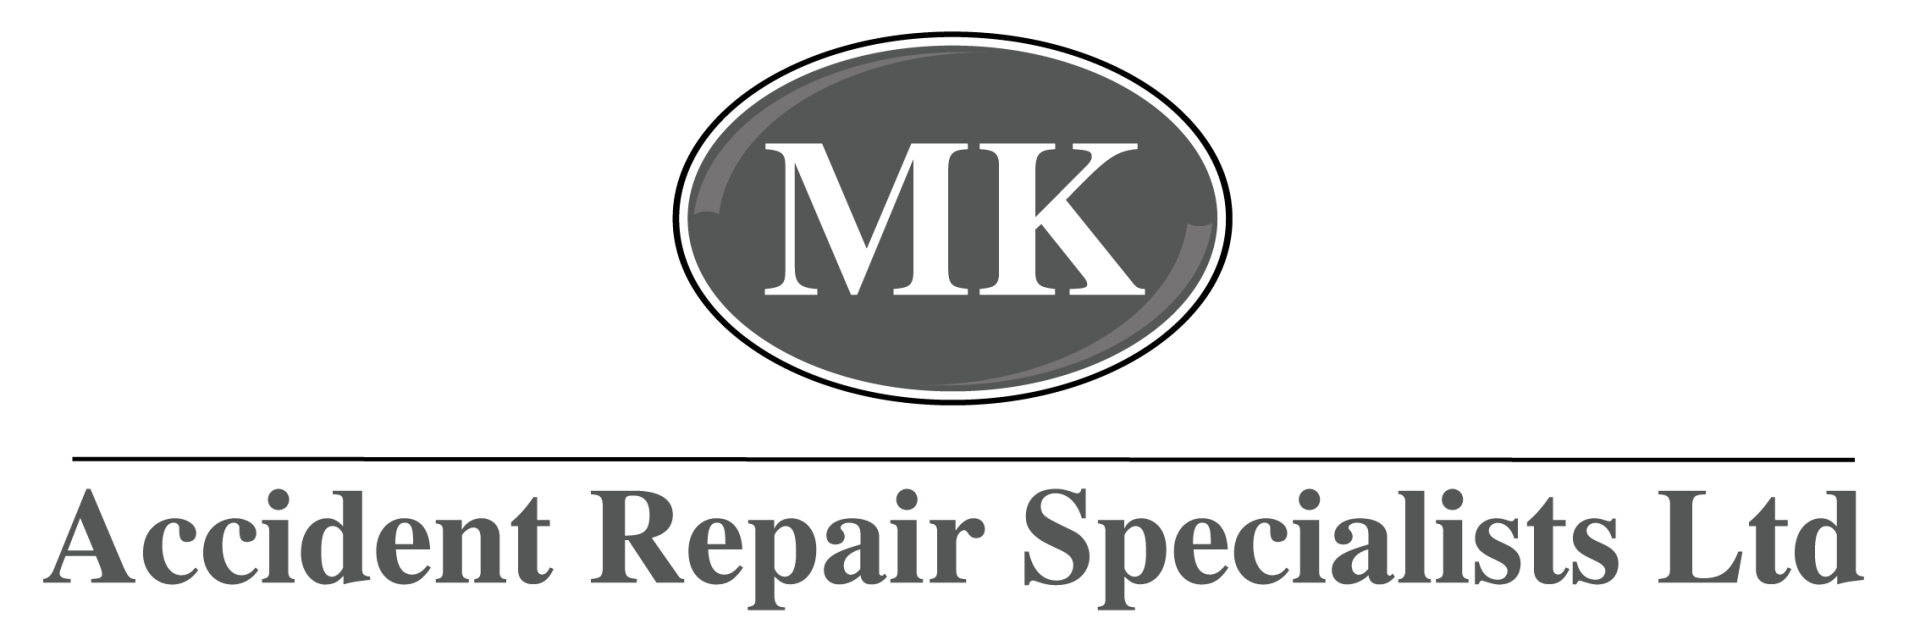 MK Accident Repair Specialists Ltd Logo